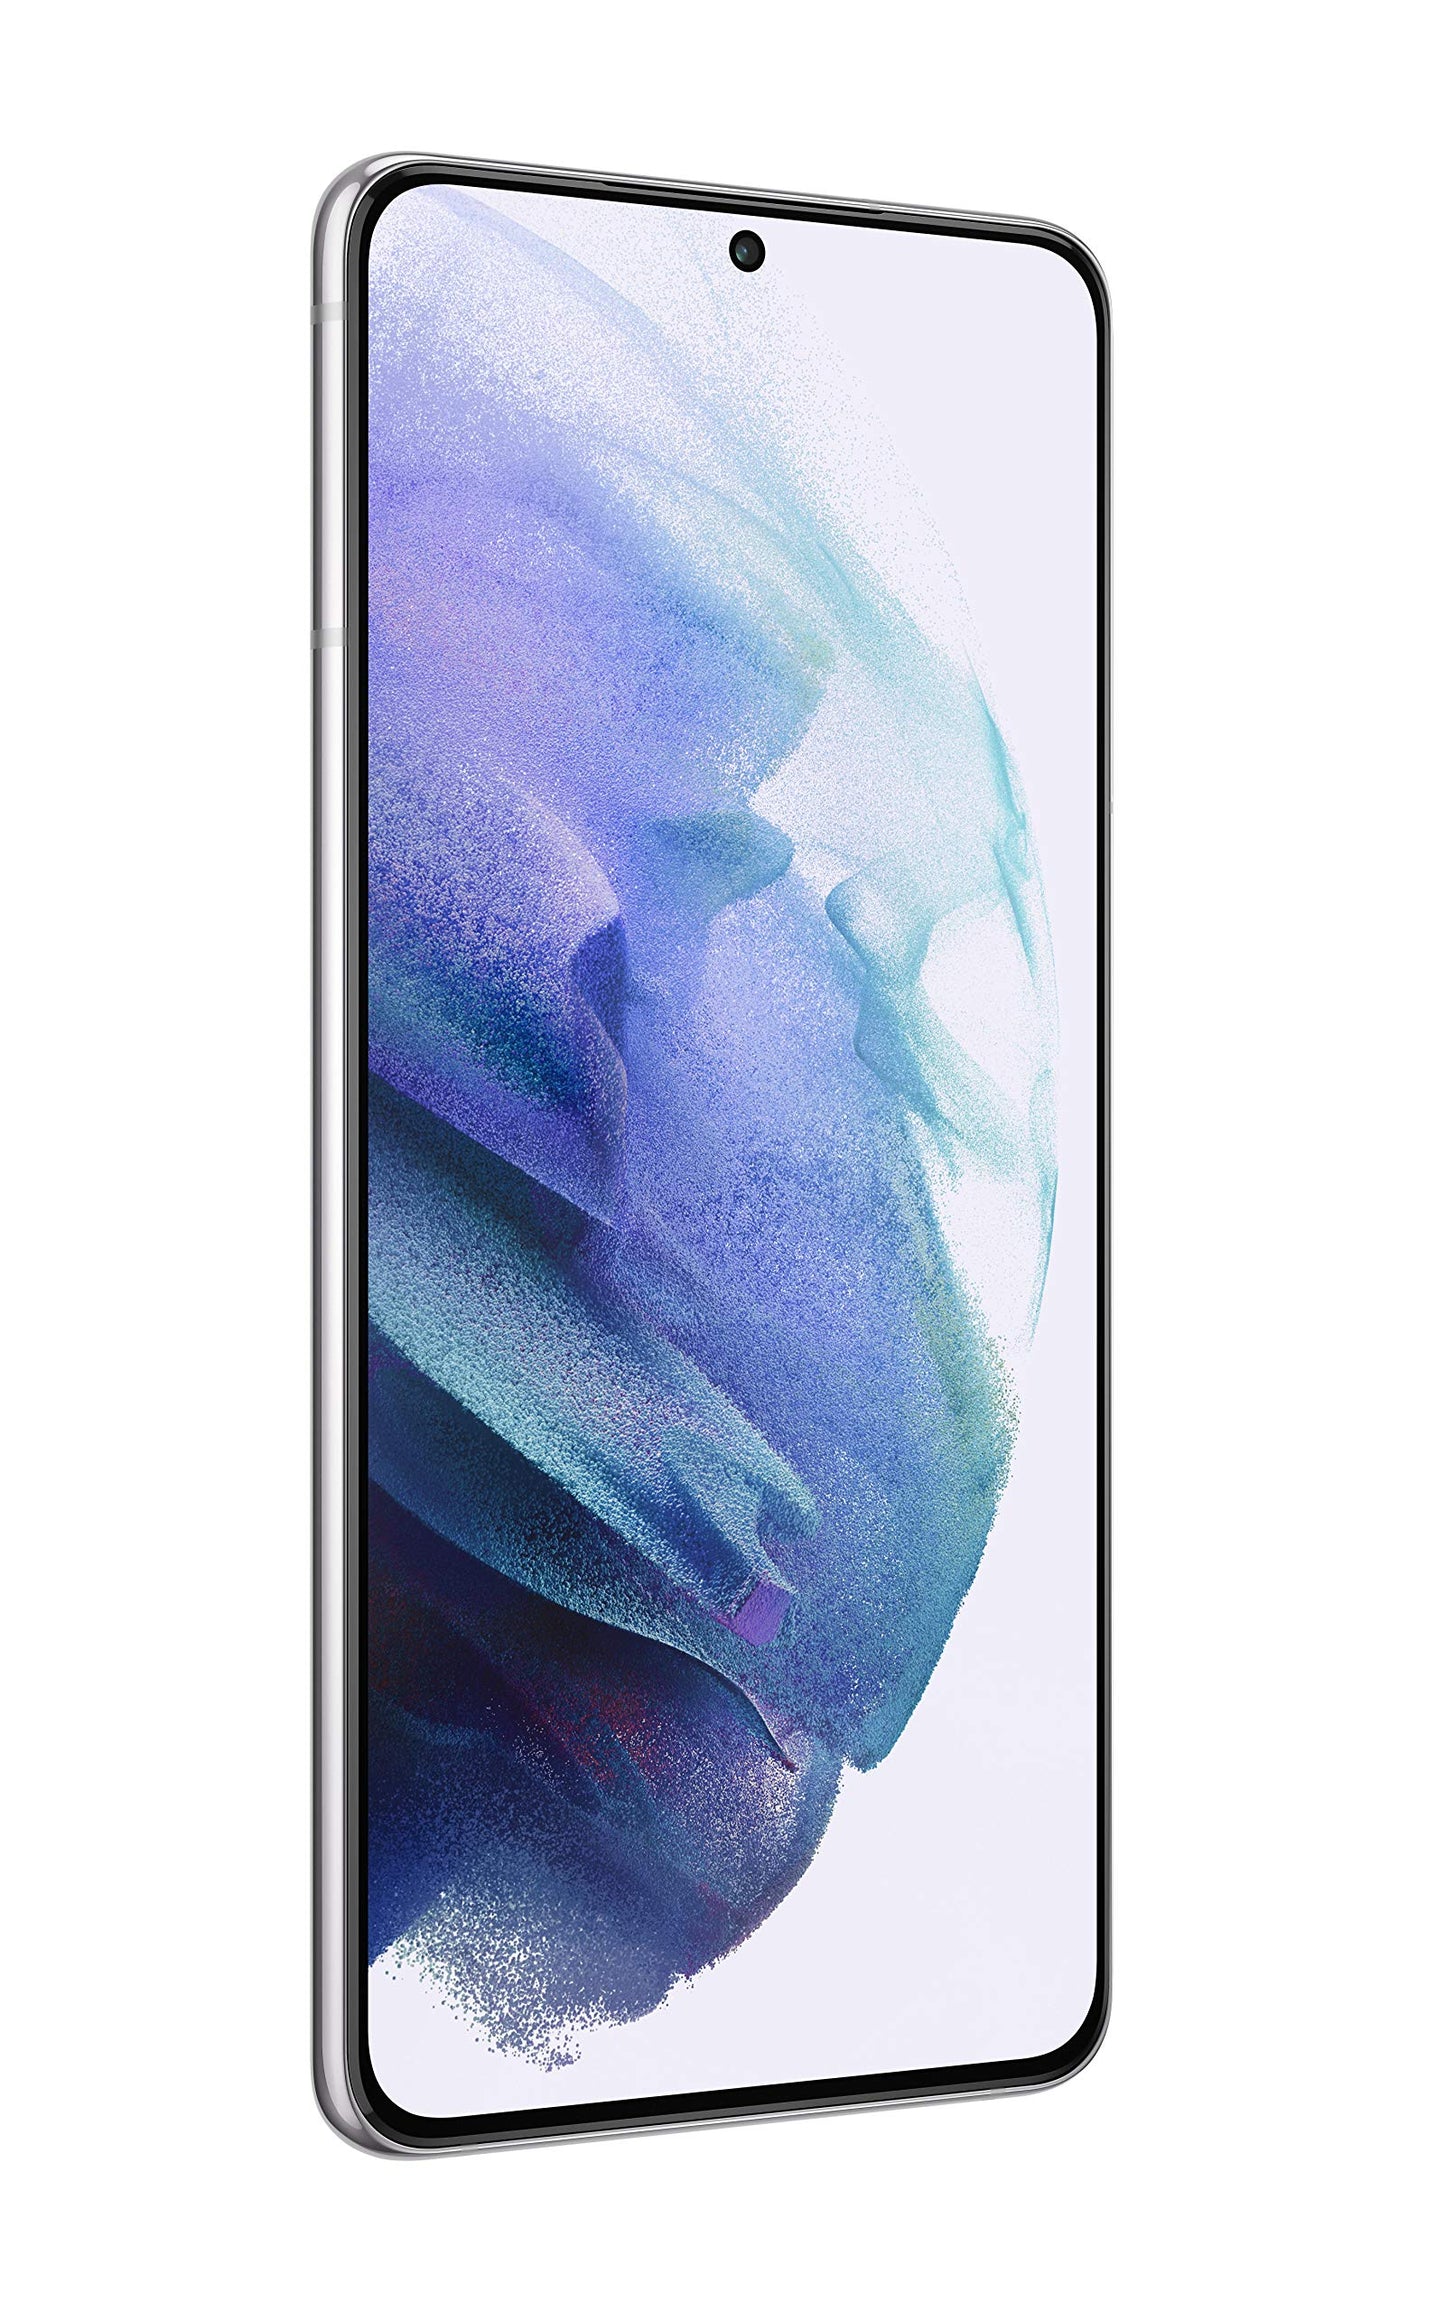 Samsung Galaxy S21+ Plus 5G | Factory Unlocked Android Cell Phone | US Version 5G Smartphone | Pro-Grade Camera, 8K Video, 64MP High Res | 128GB, Phantom Silver (SM-G996UZVAXAA)